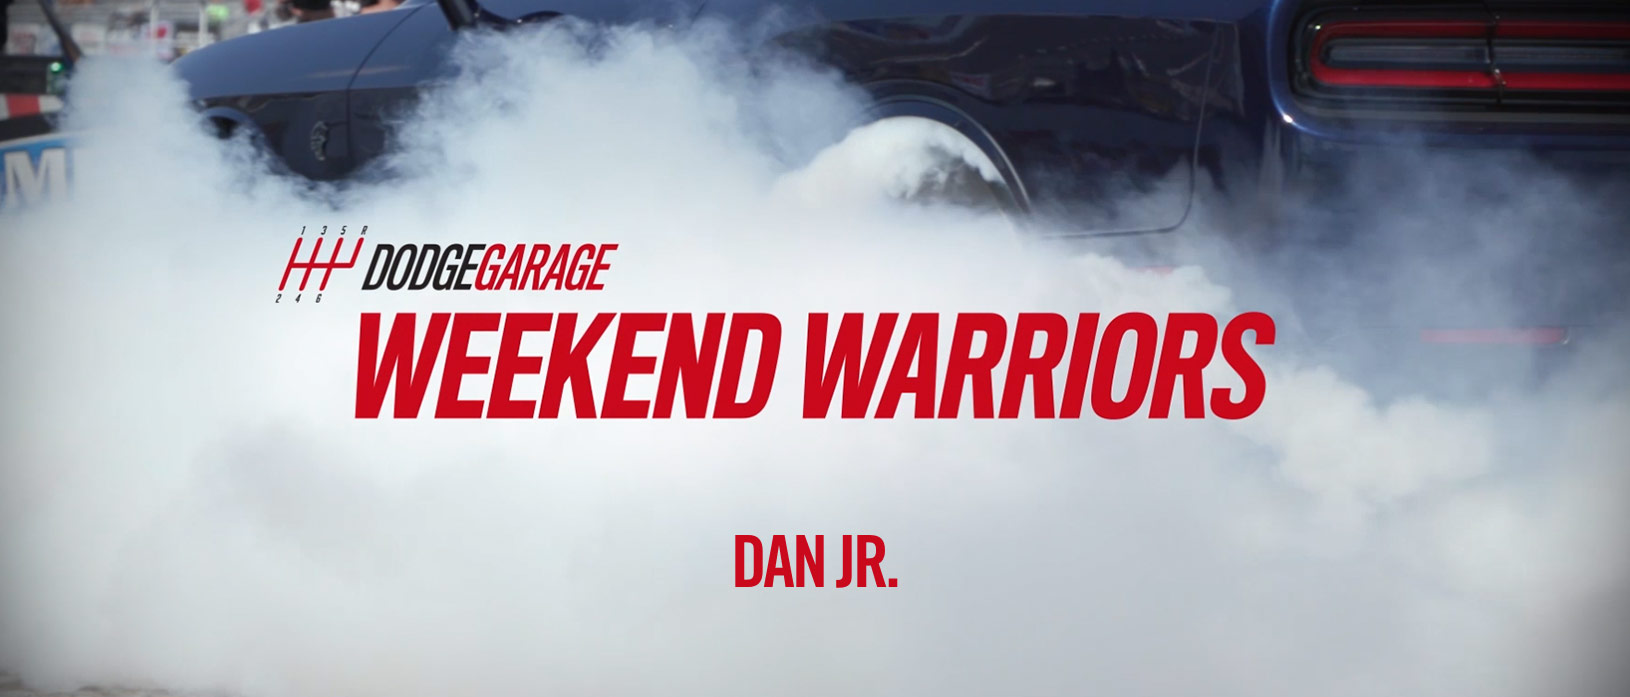 Weekend Warriors Dan Jr.